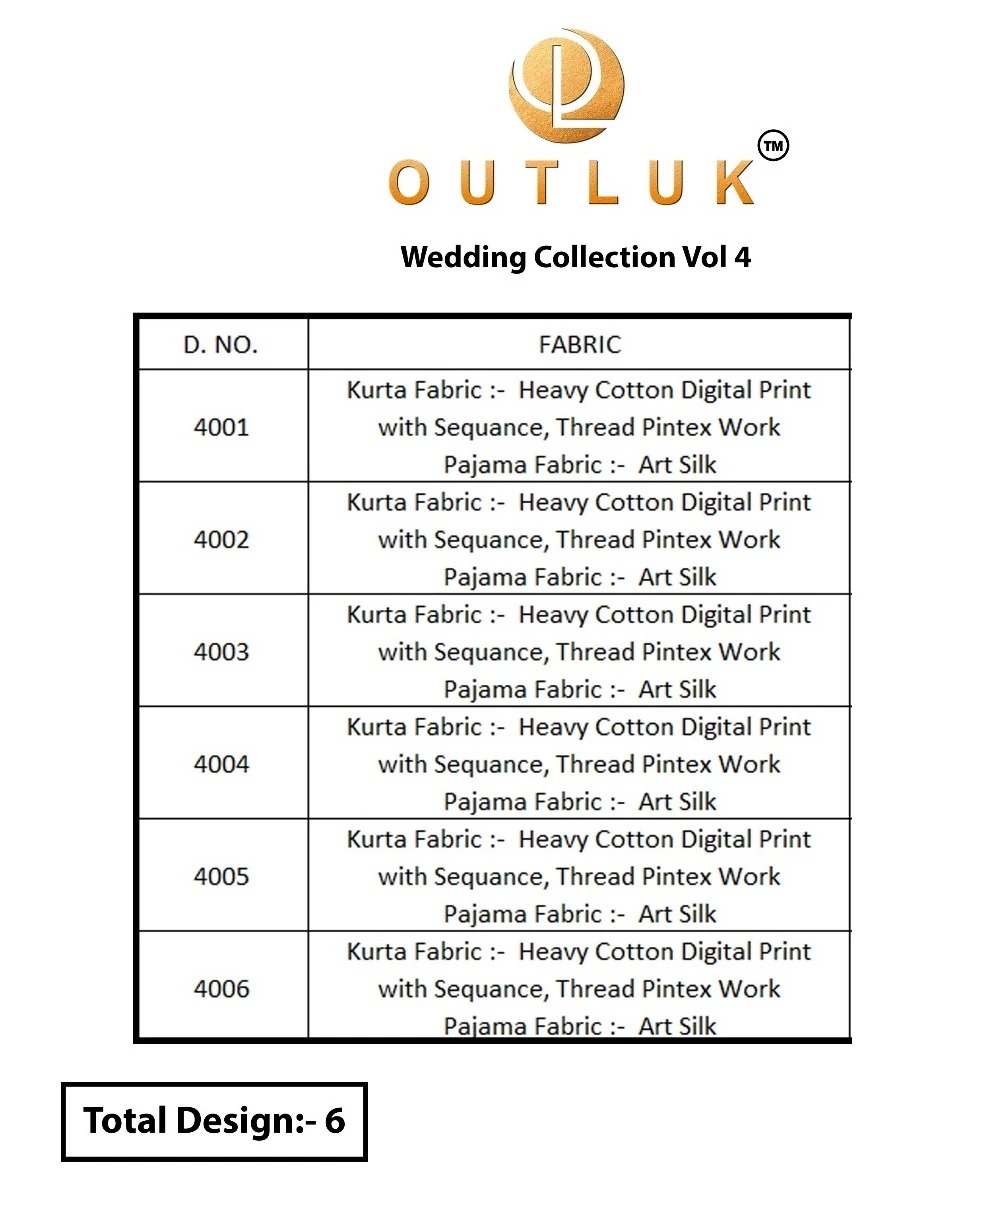 Outluk Wedding Collection Vol 4 collection 7